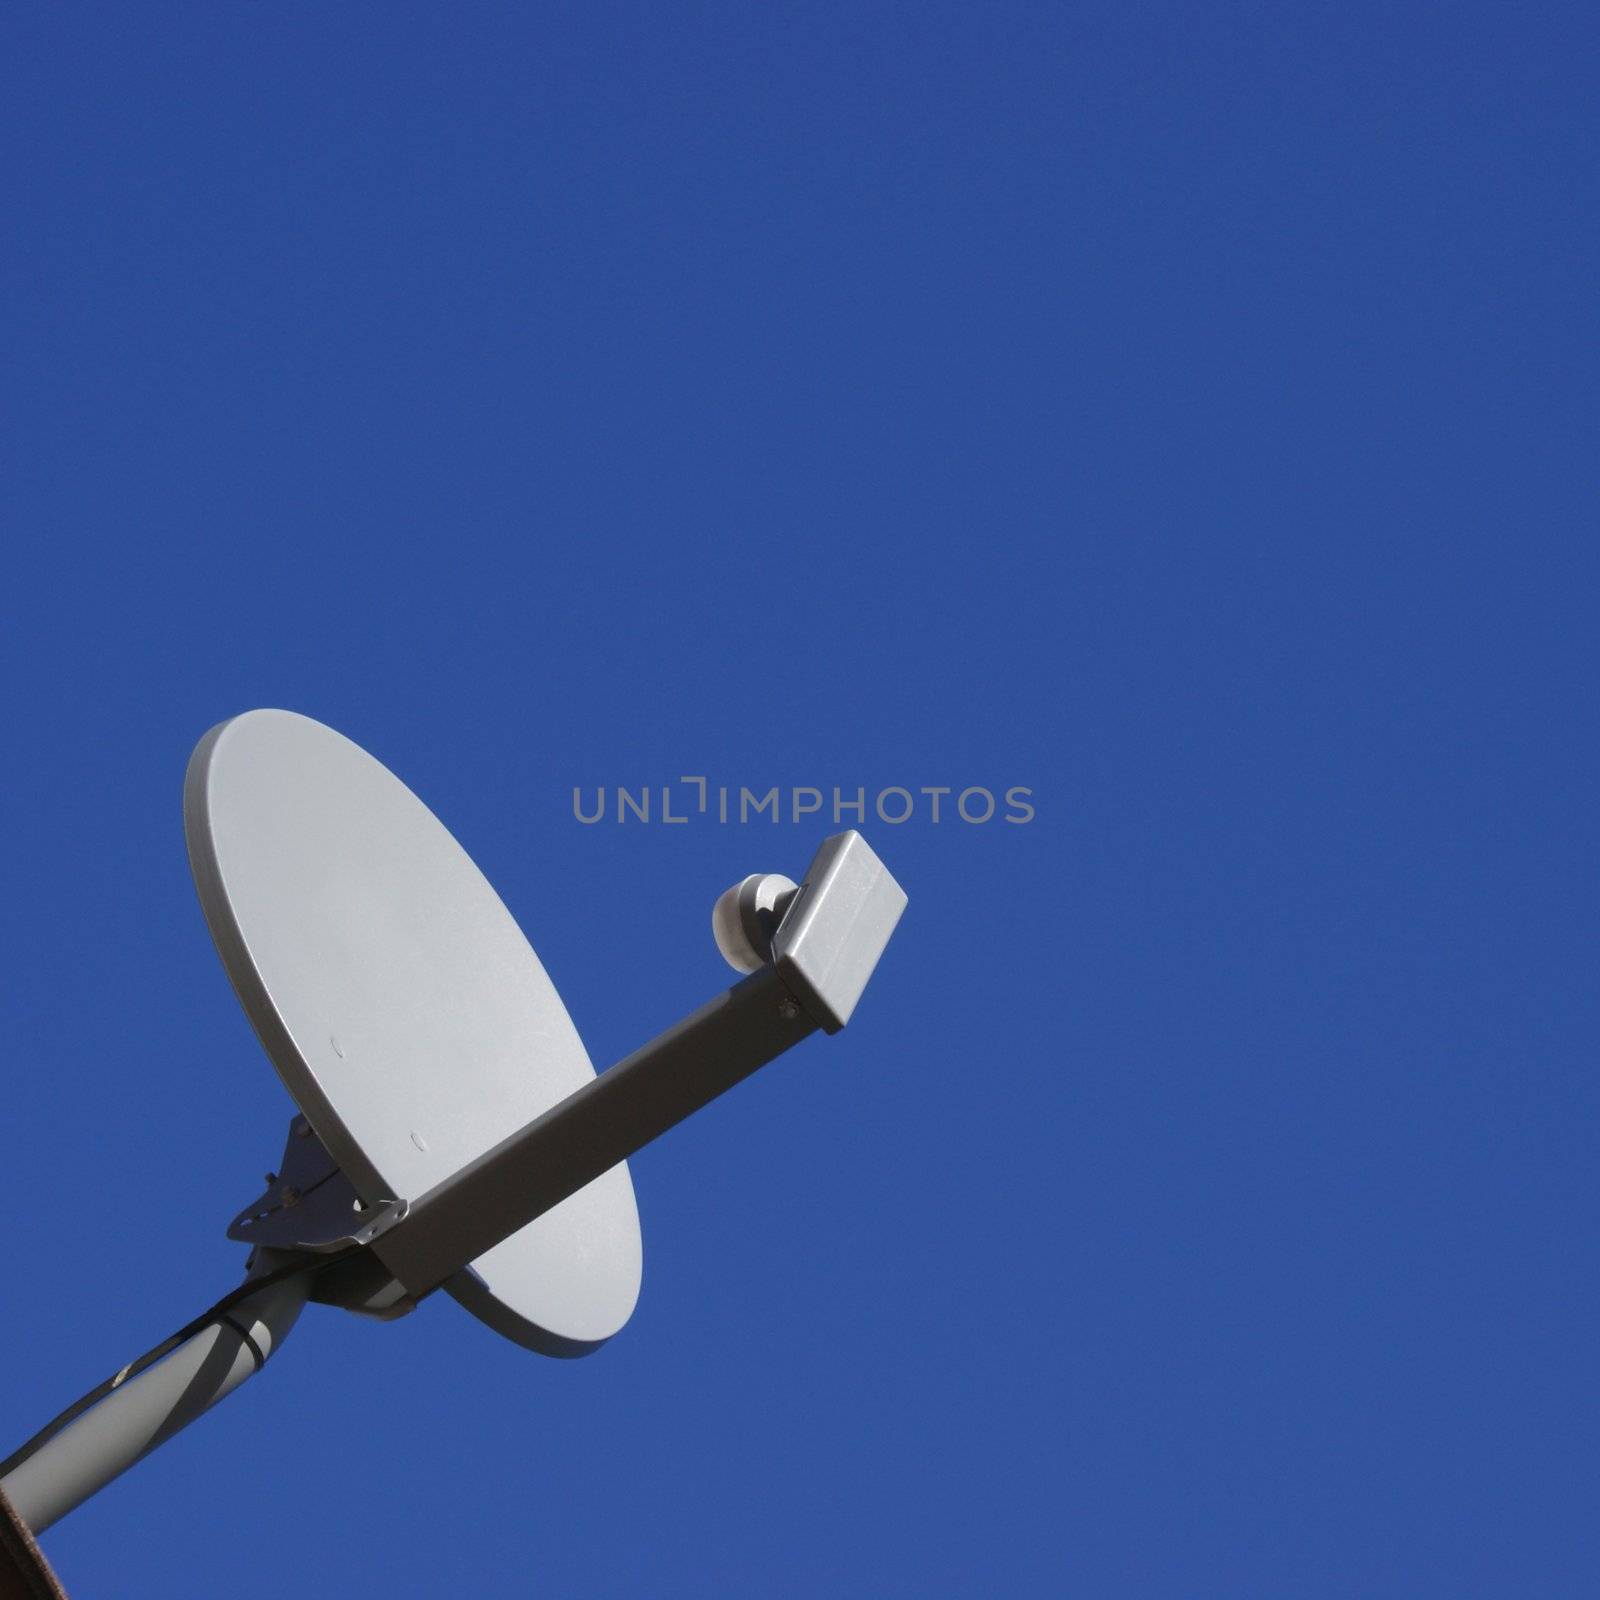 A satellite dish over a bright blue sky.